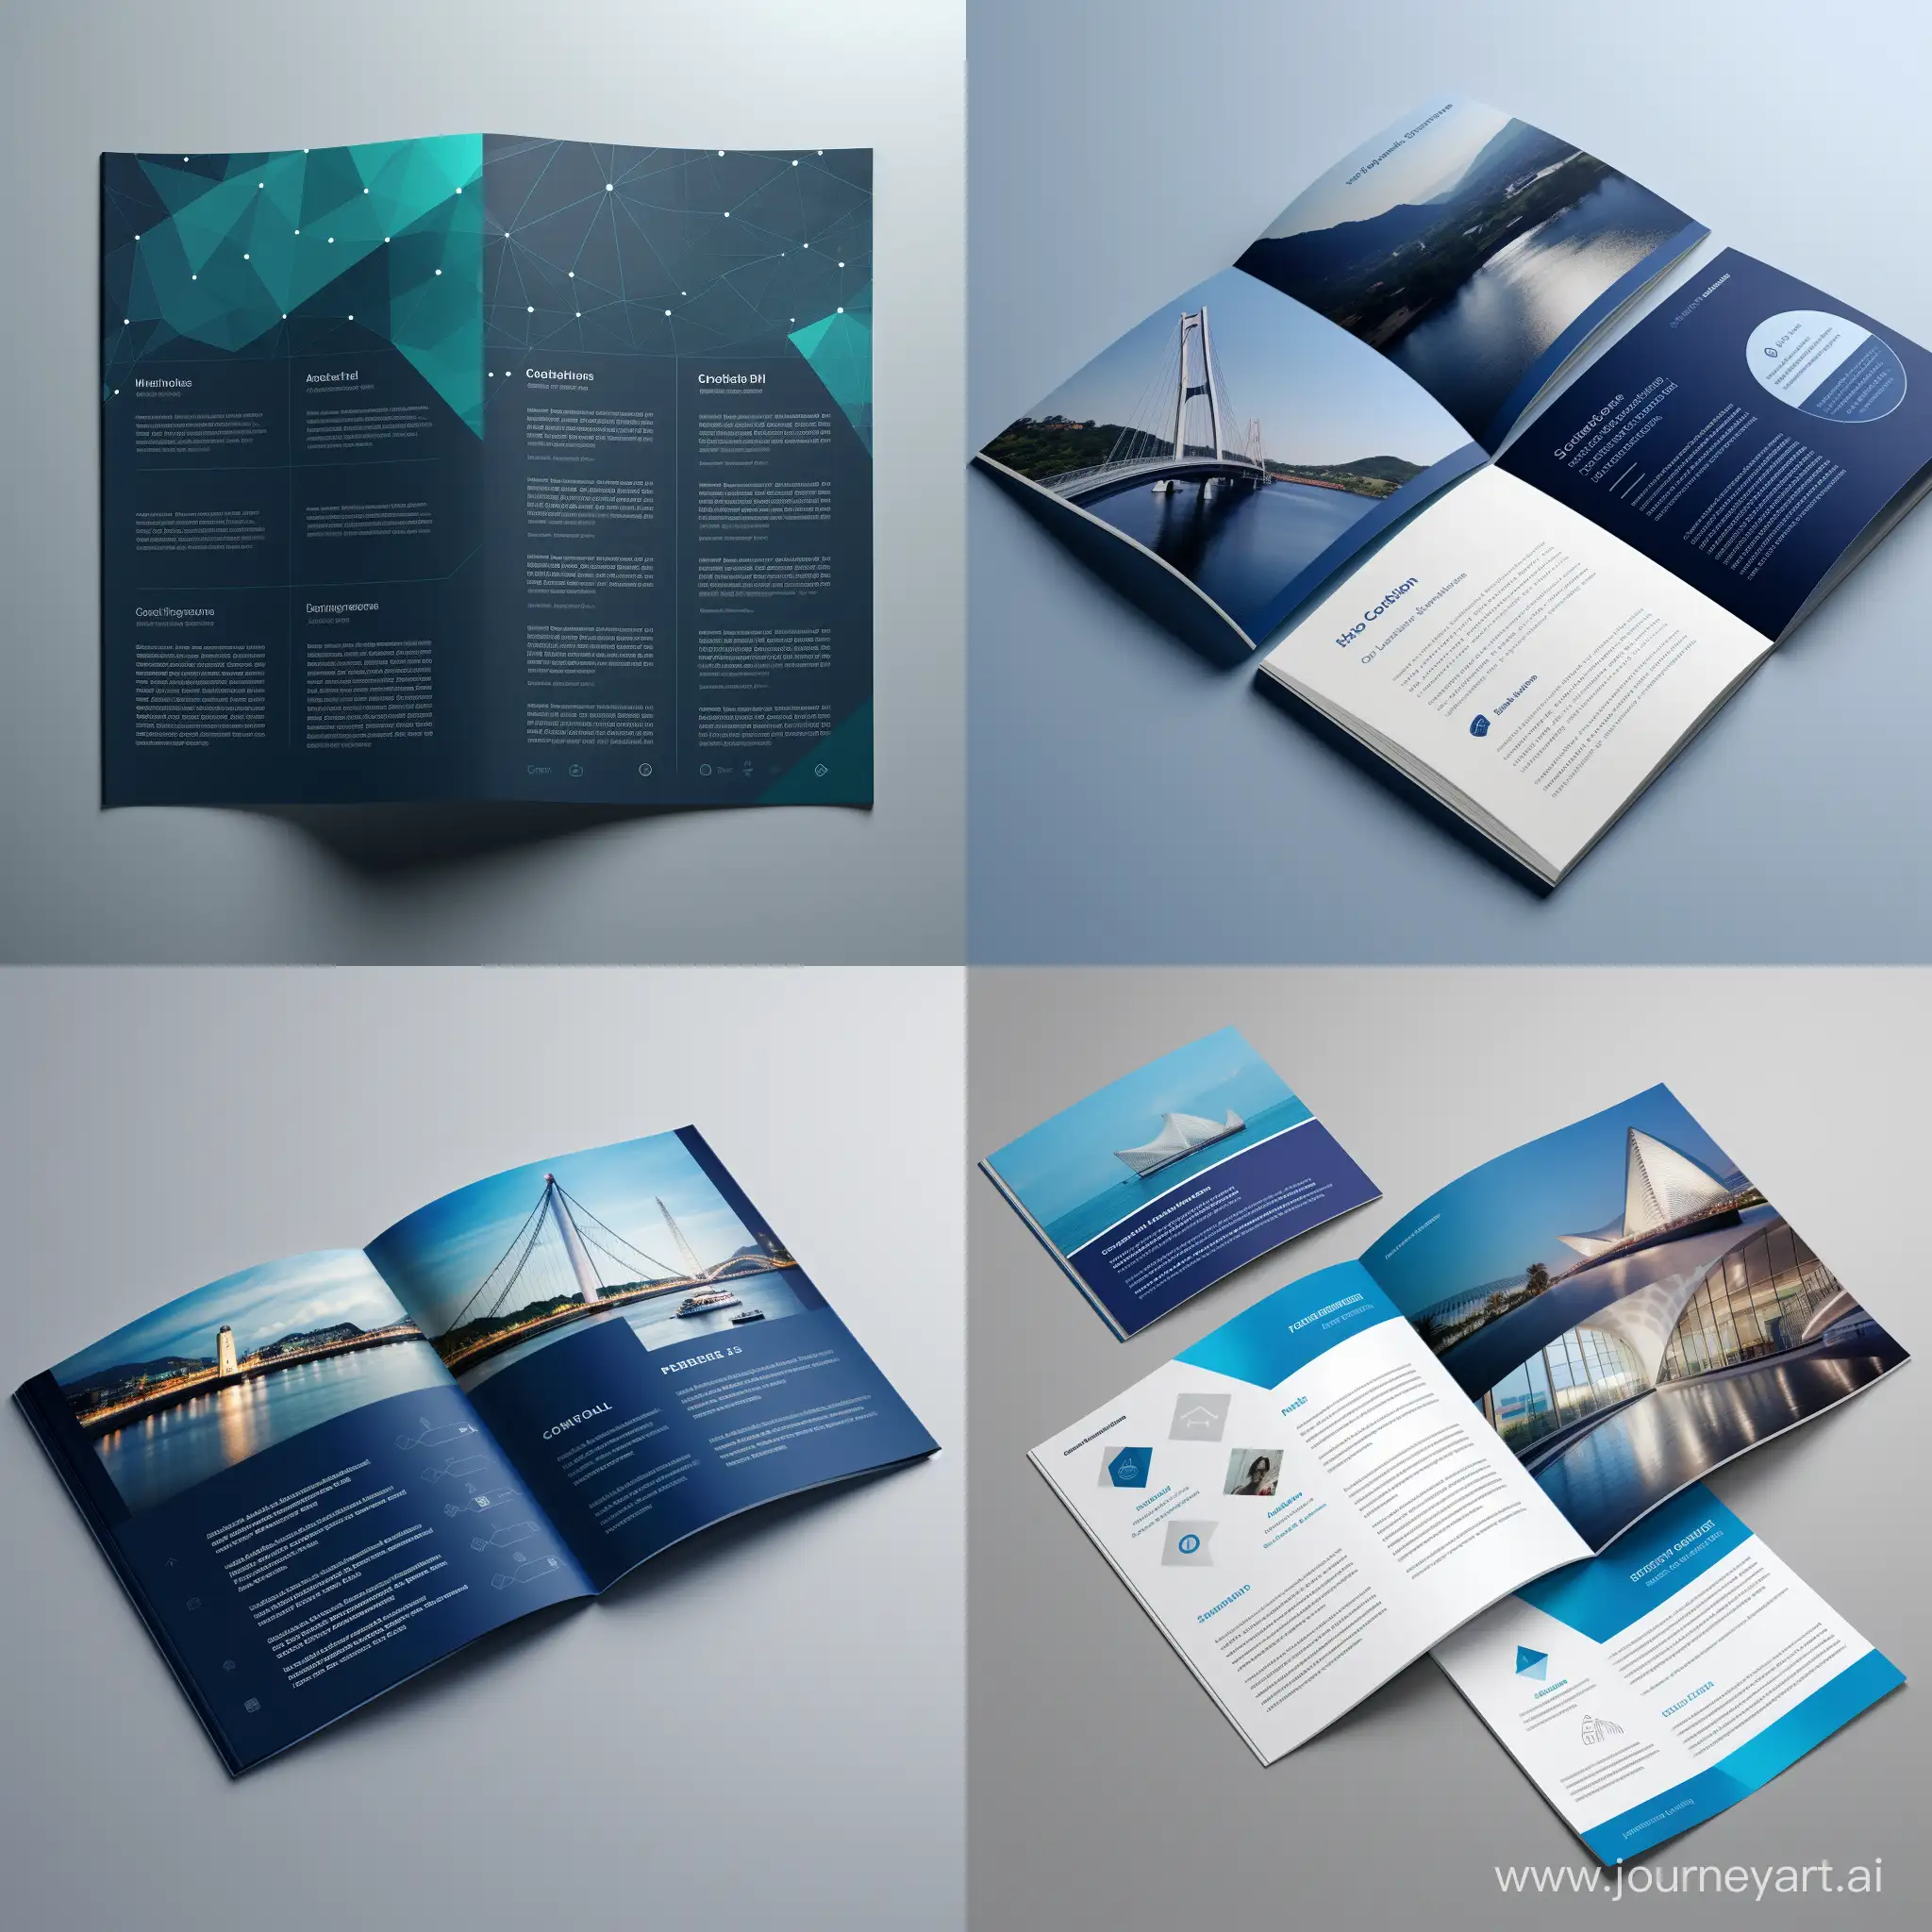 Professional-Corporate-Brochure-Design-11-Aspect-Ratio-Unique-and-Engaging